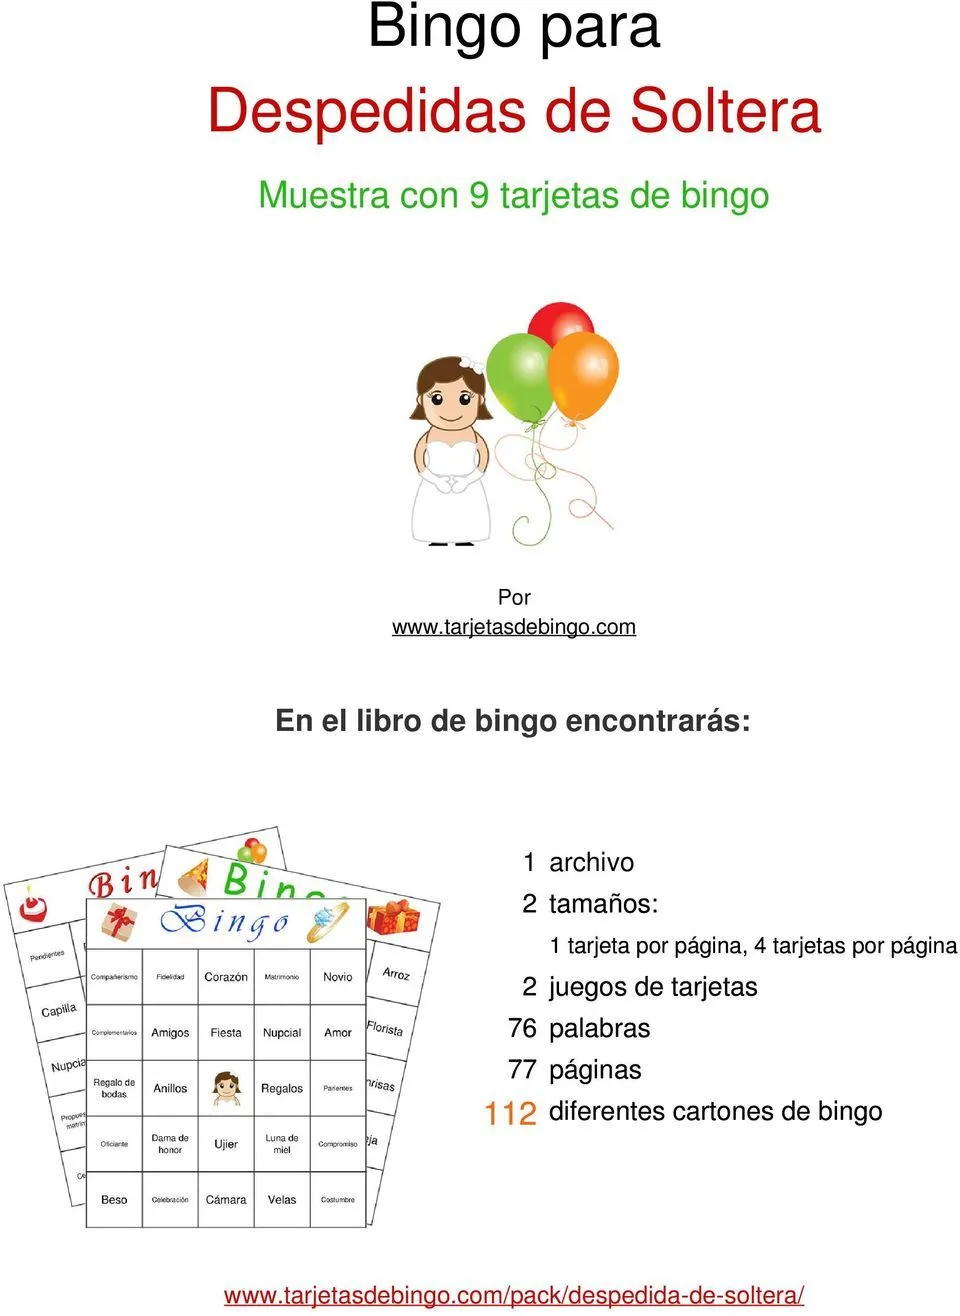 Bingo para Despedidas de Soltera - PDF Descargar libre